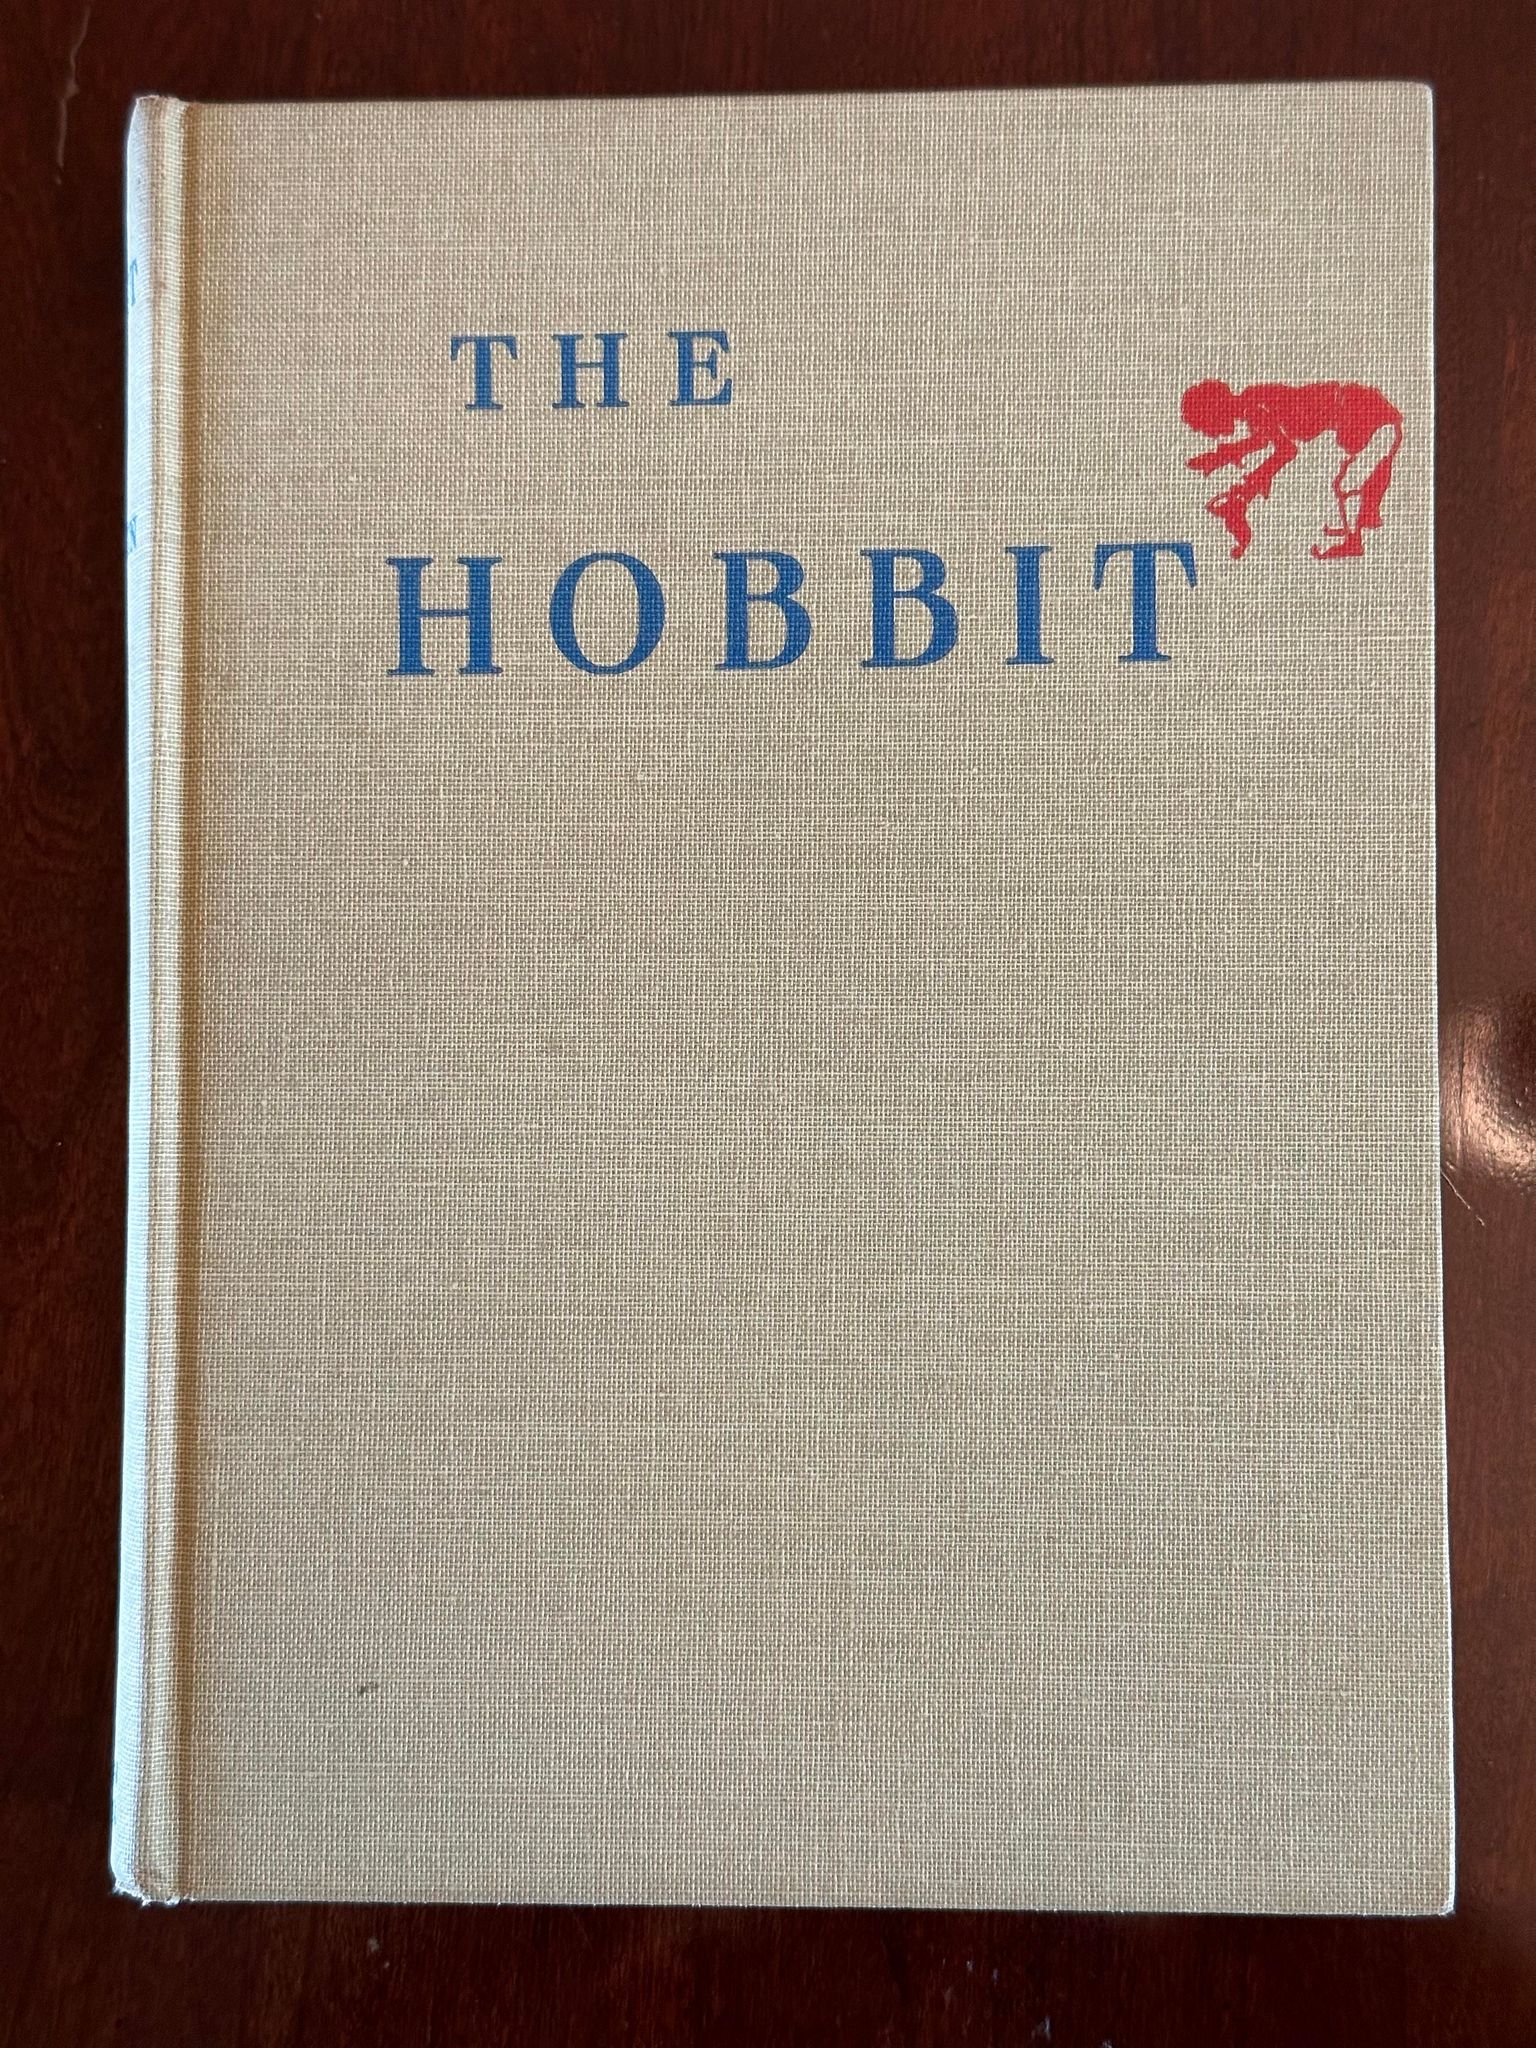 Hobbit 1st state book.jpeg